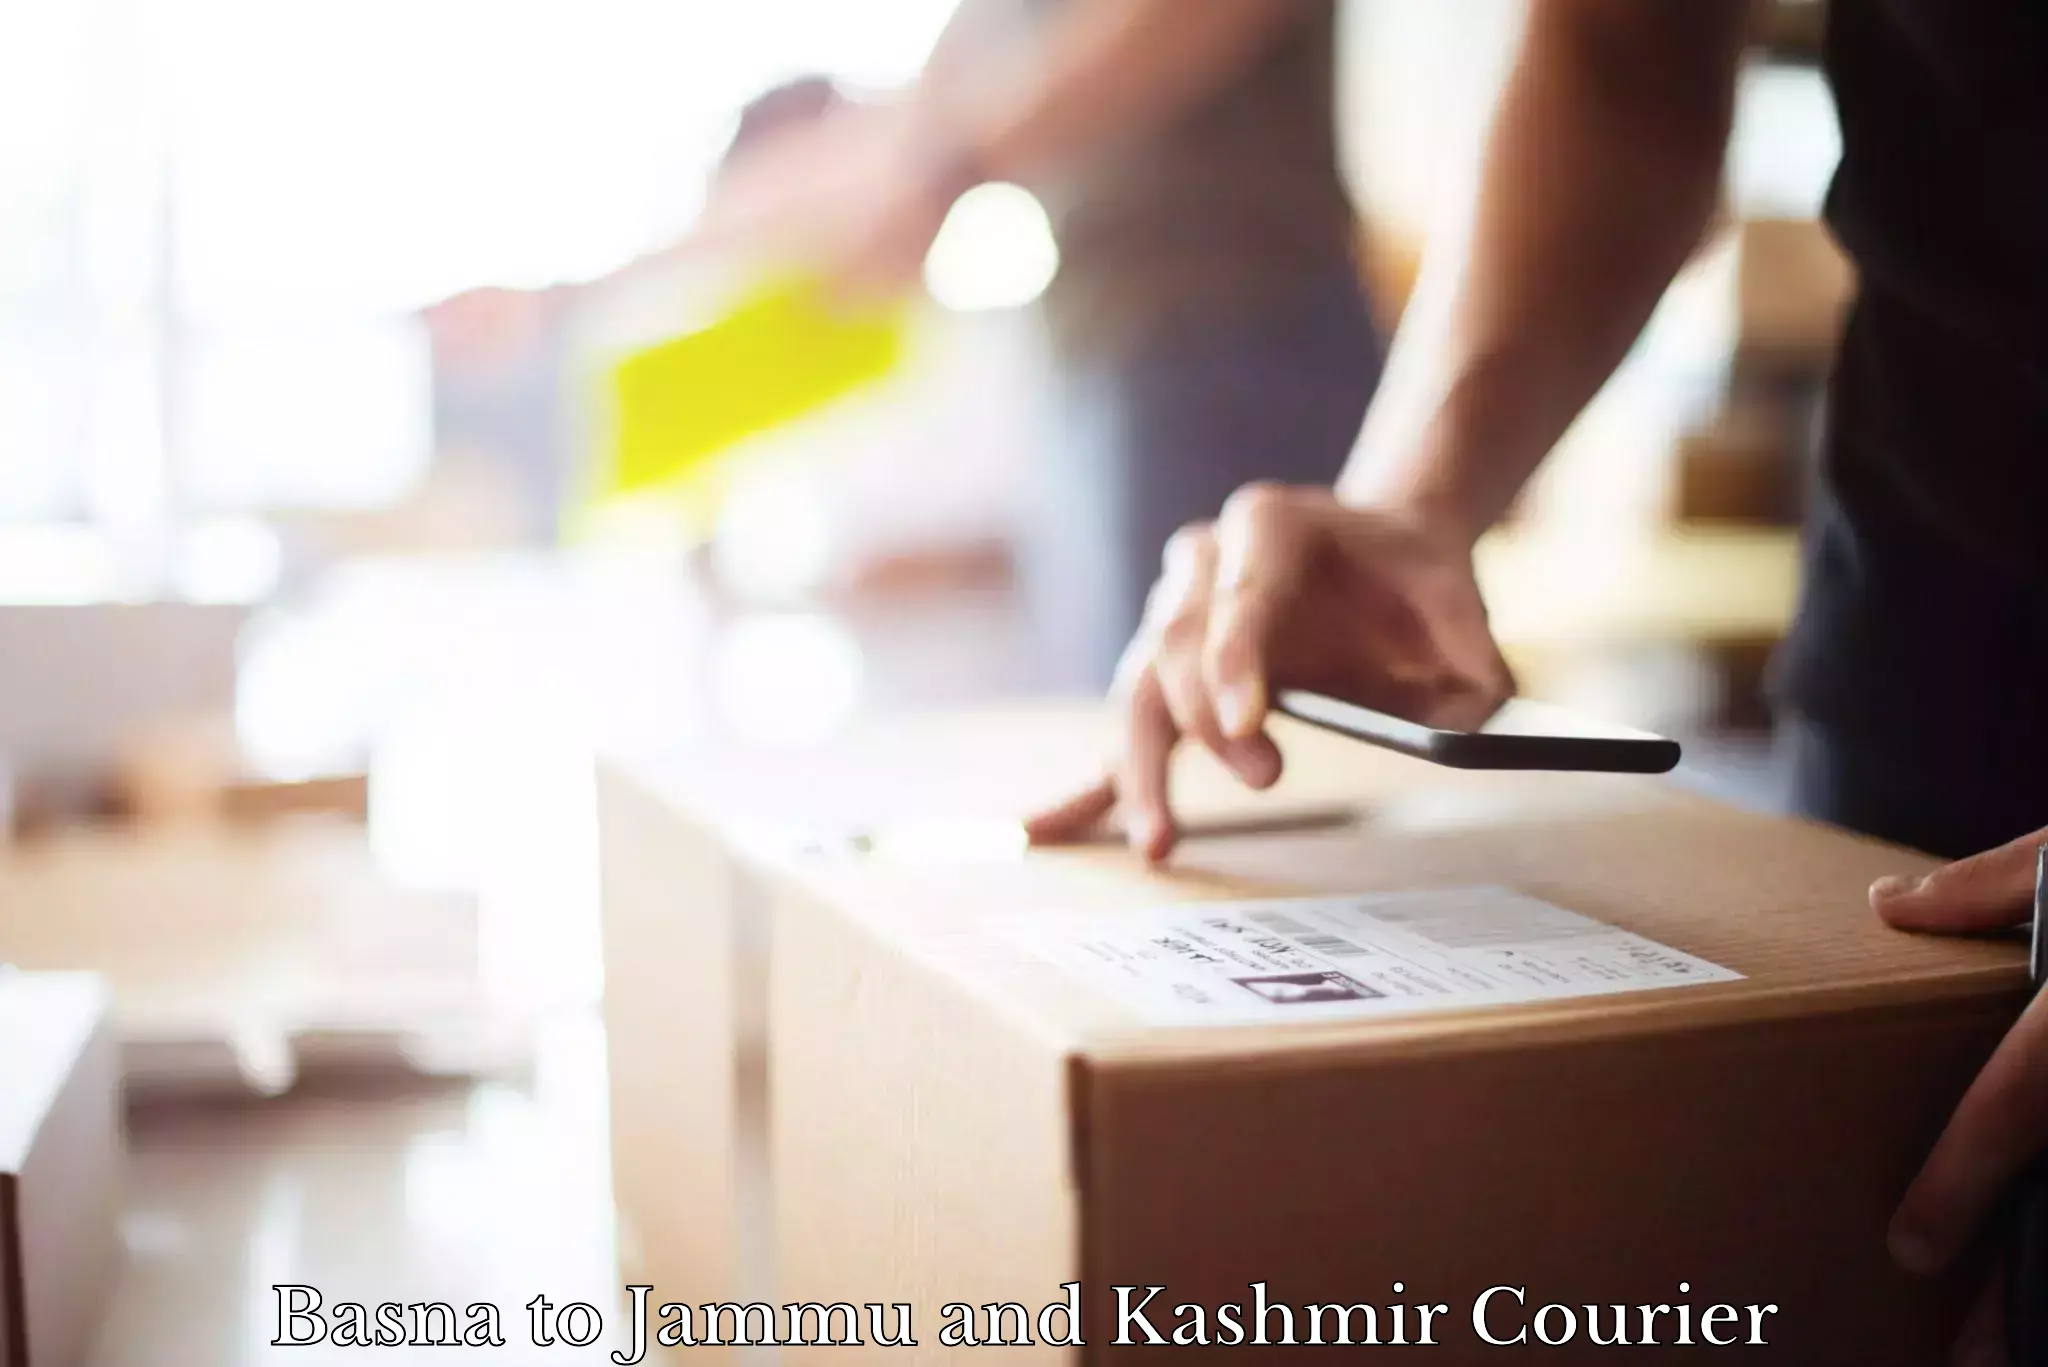 Courier service efficiency Basna to Srinagar Kashmir